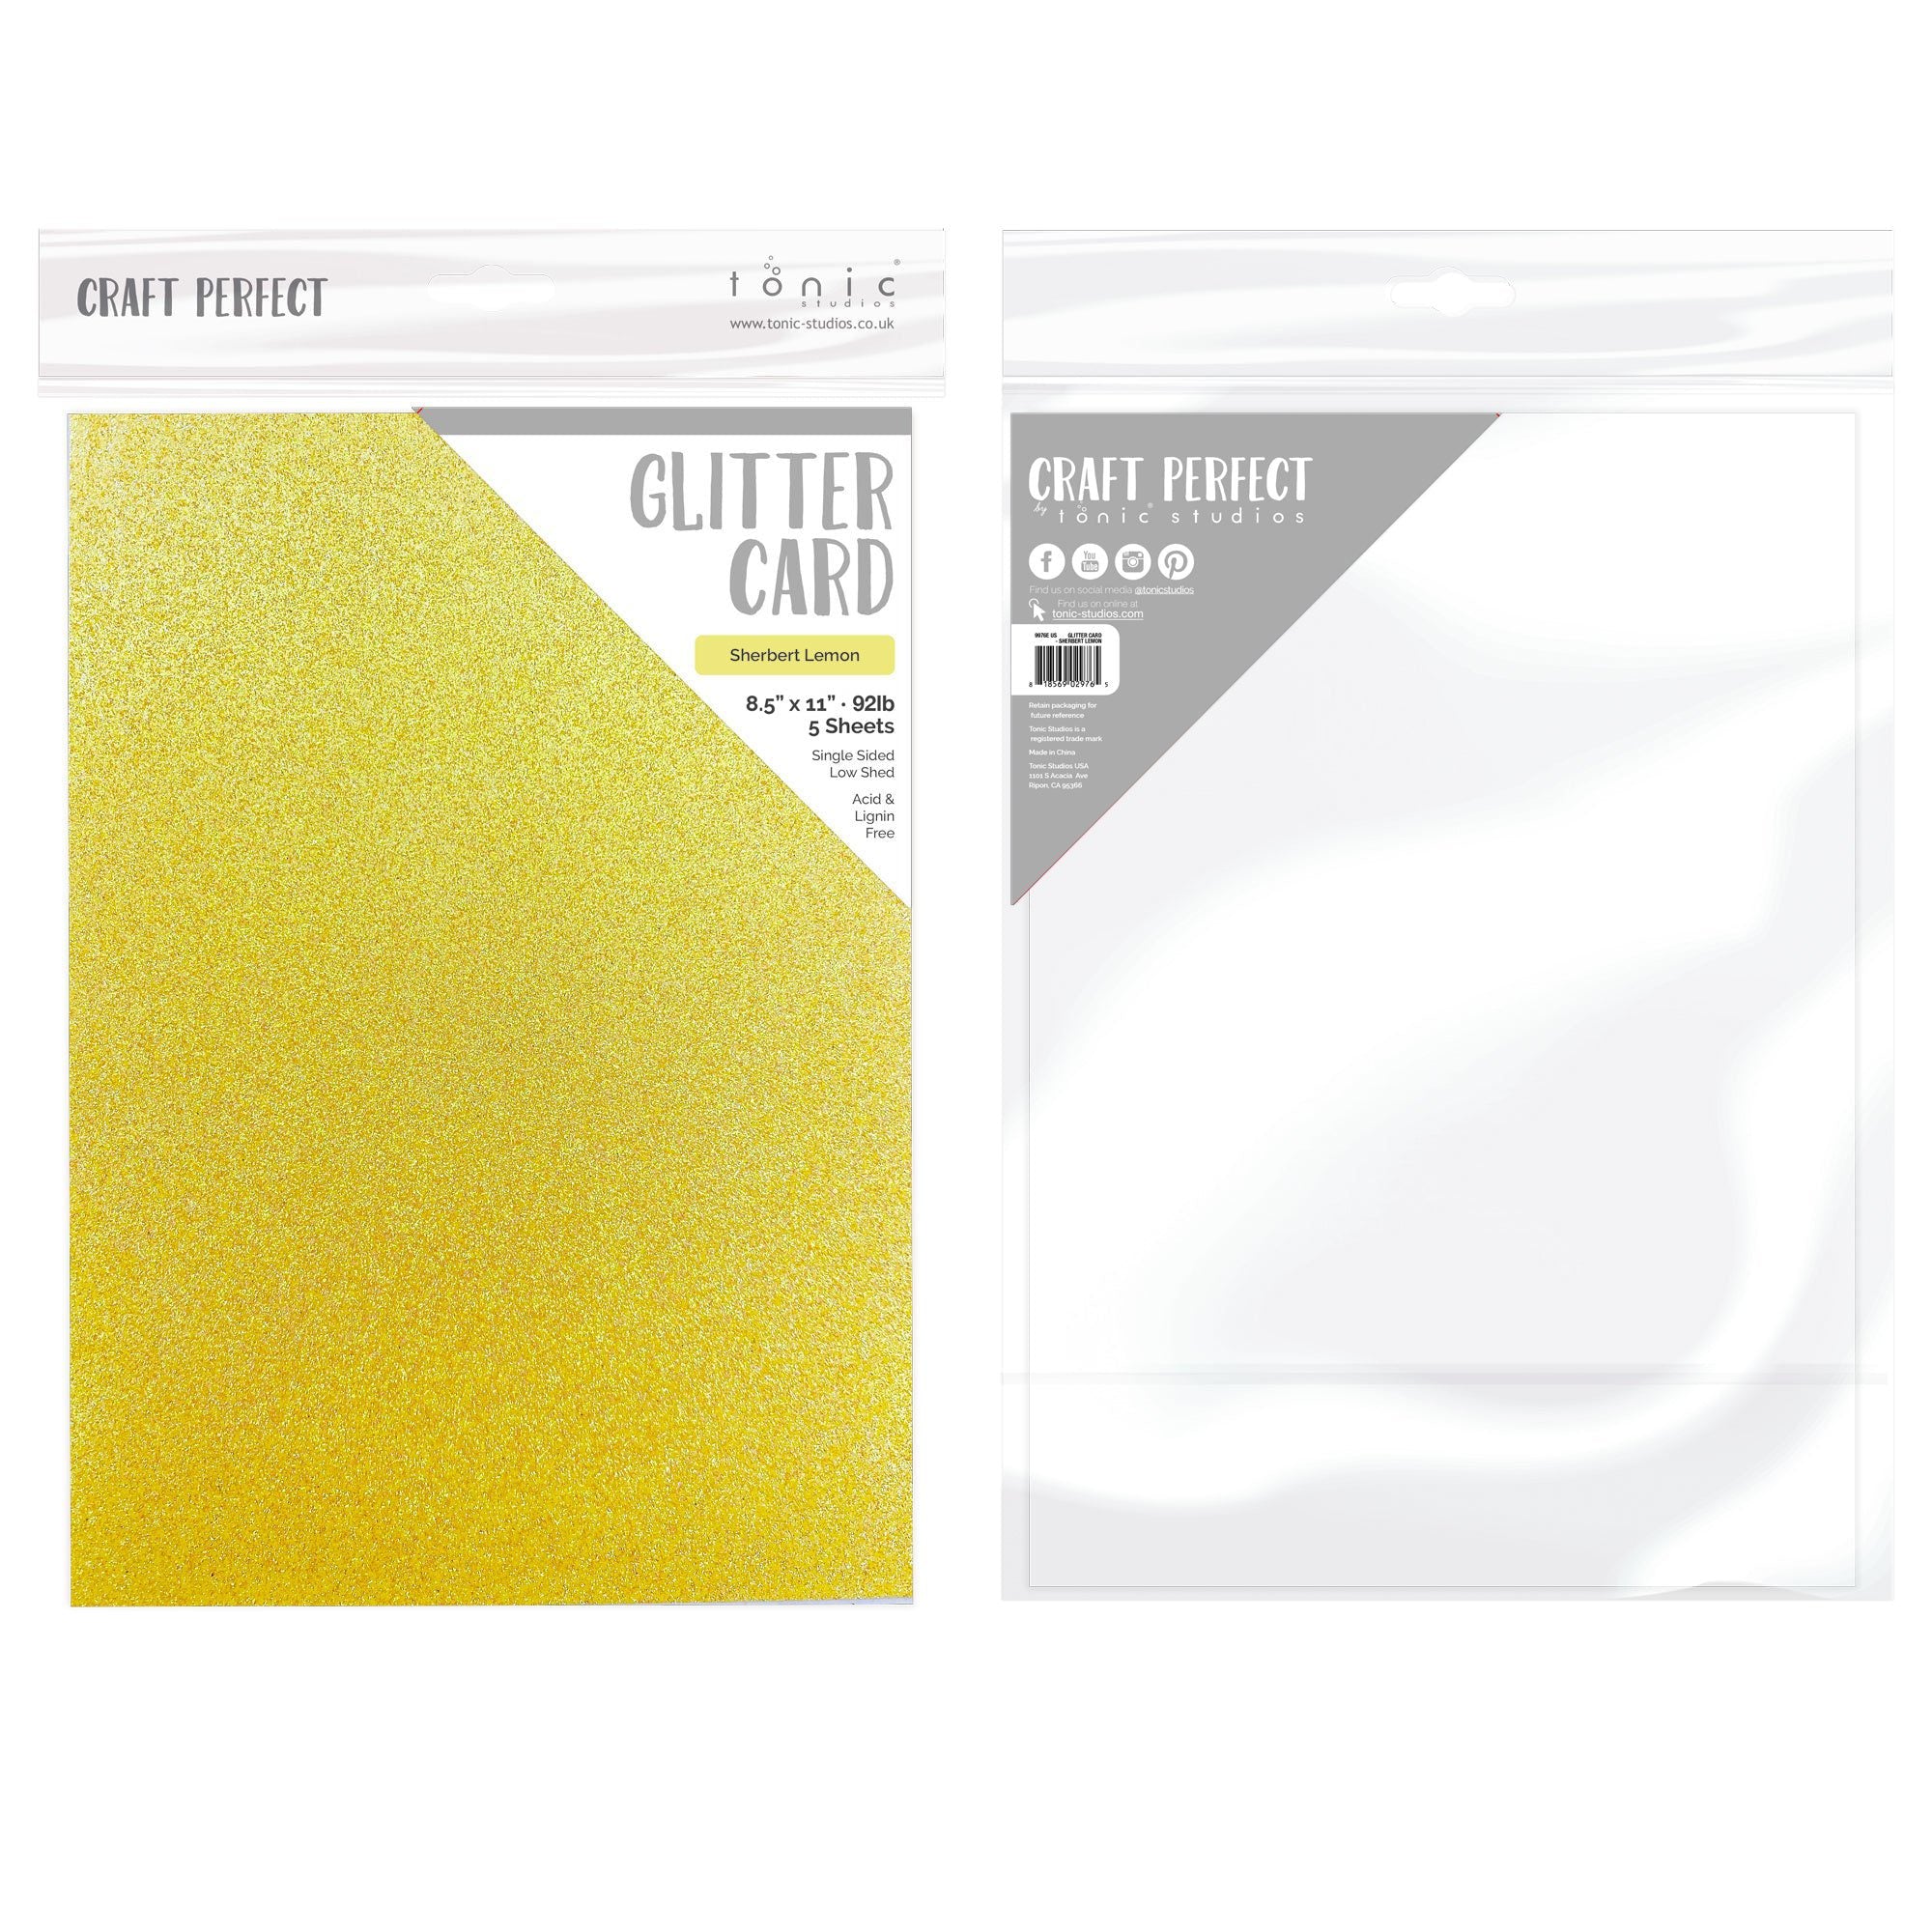 Spring Tones Glitter Cardstock - 10 Pack